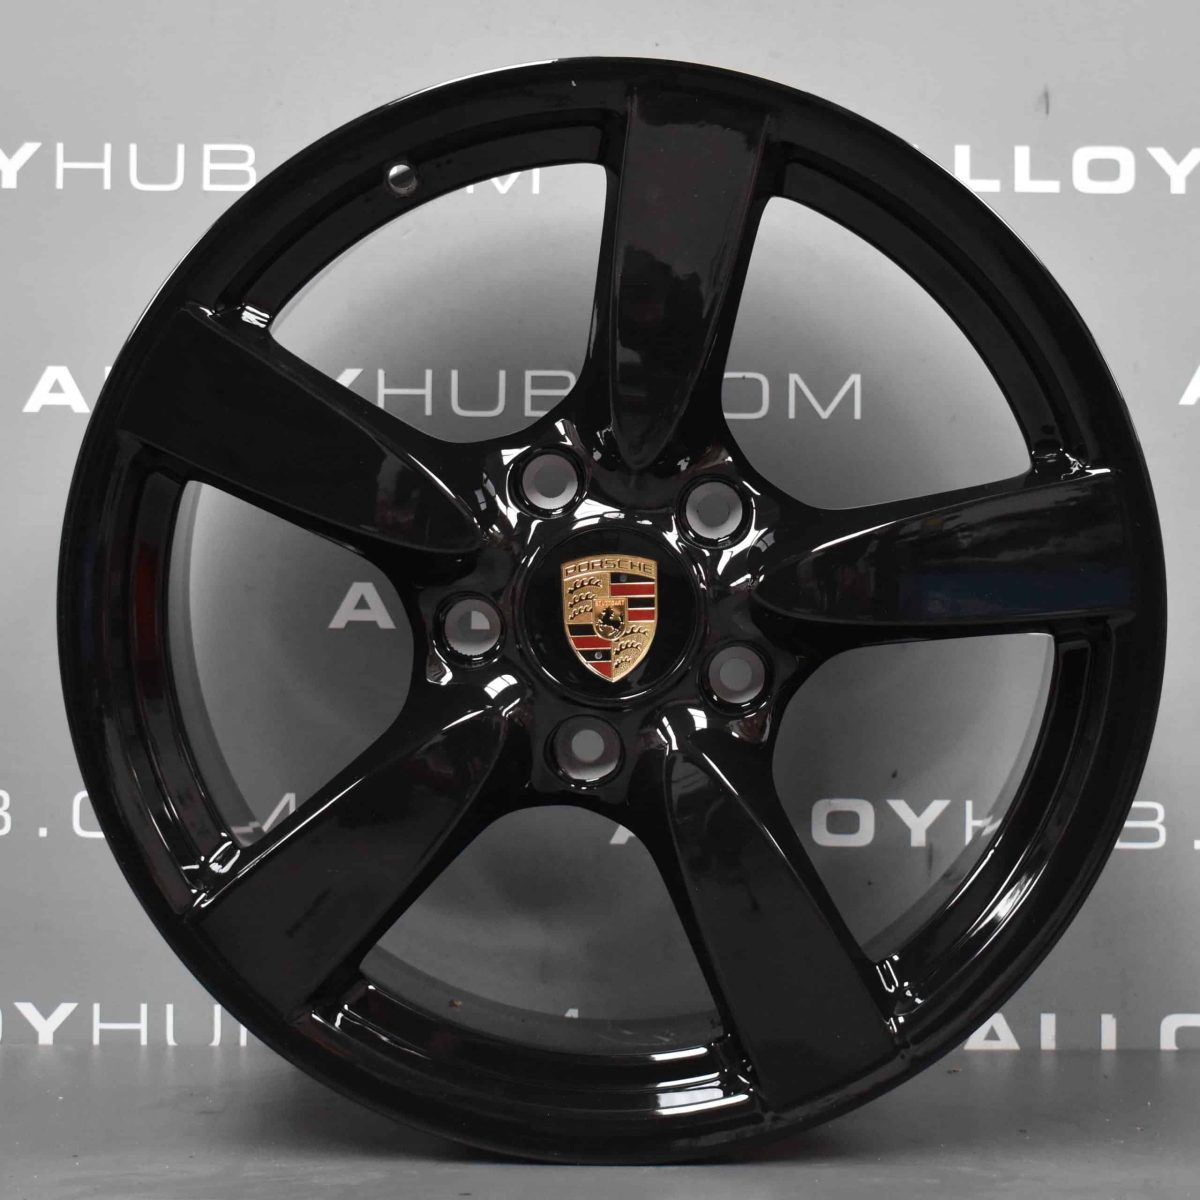 Genuine Porsche Cayman Boxster 5 Spoke 18" inch Alloy Wheels with Gloss Black Finish 98736213601 98736213801